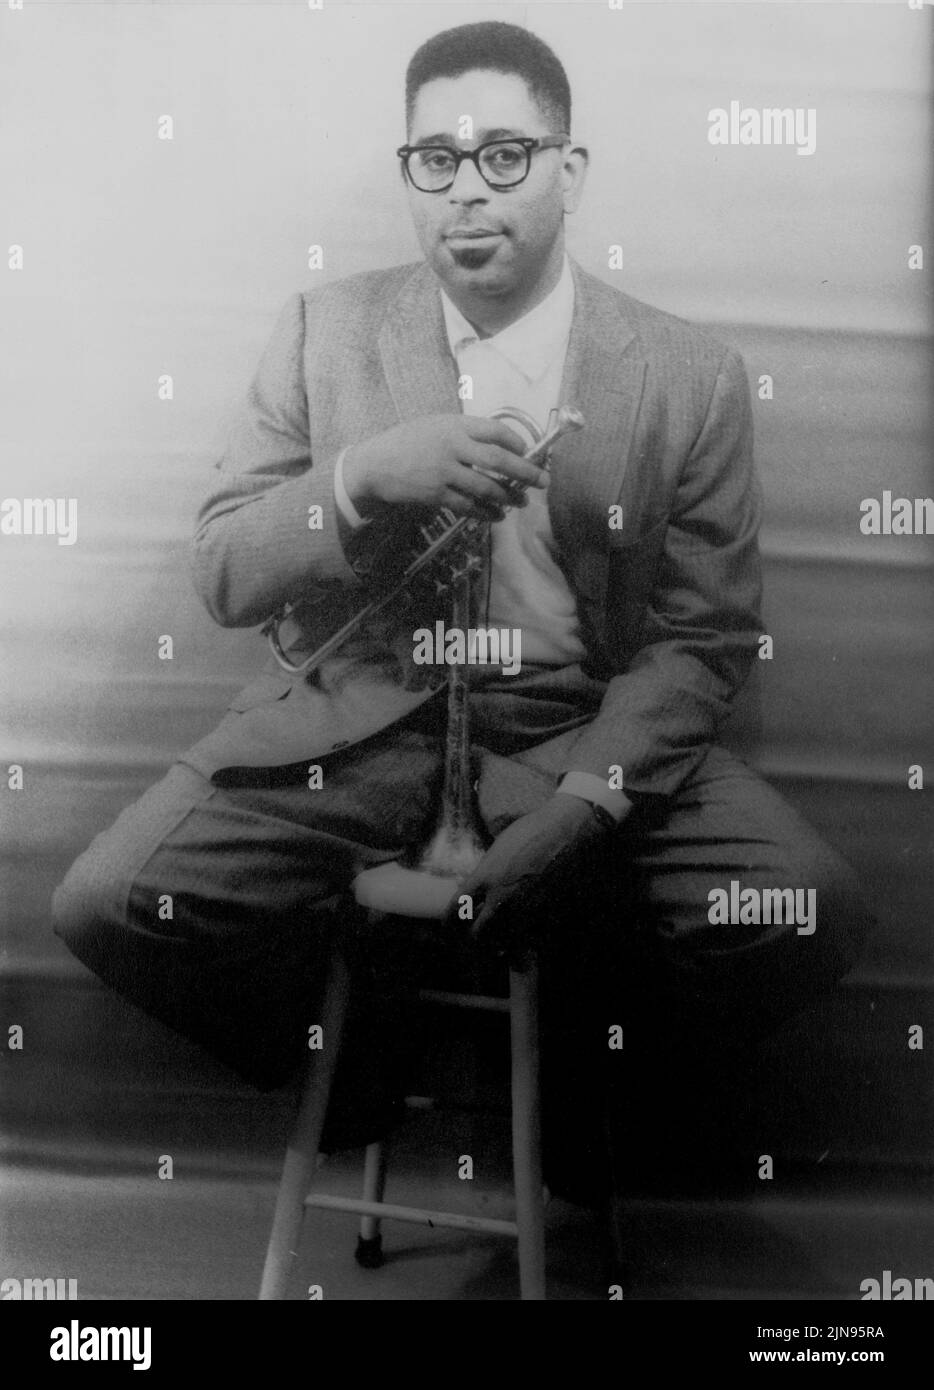 EE.UU. - 02 de diciembre de 1955 - Retrato del músico de jazz Dizzy Gillespie (John Birks) - Foto: Carl van Vechten/Geopix Foto de stock